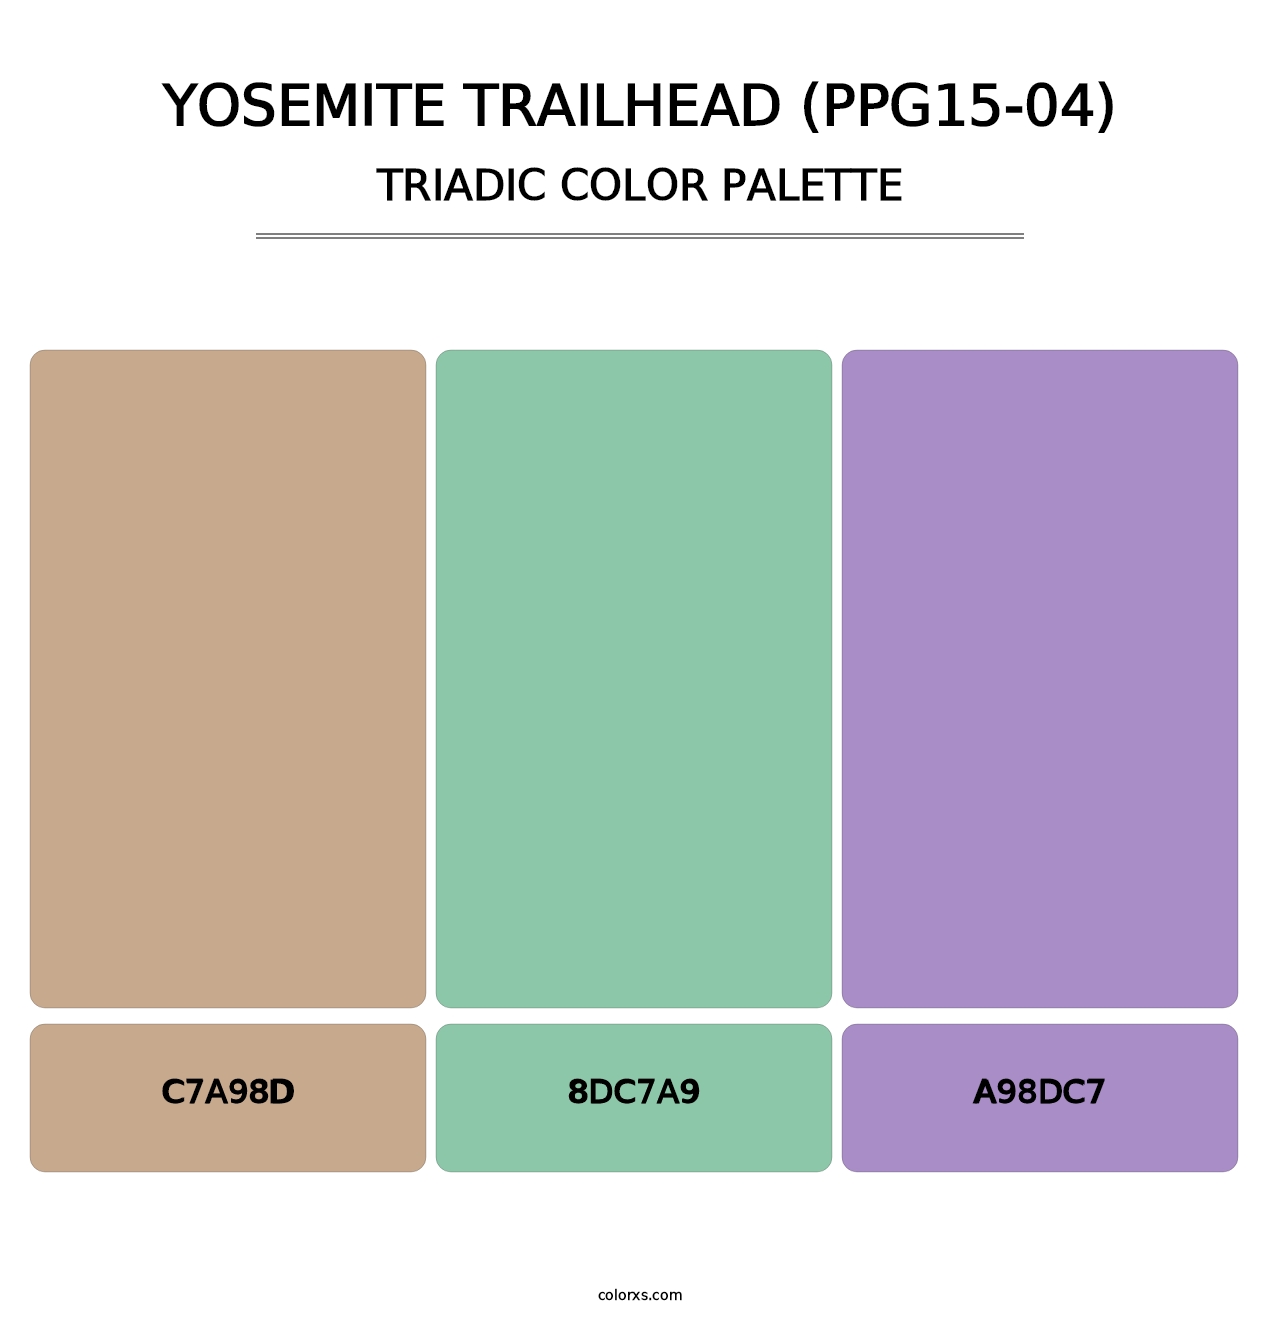 Yosemite Trailhead (PPG15-04) - Triadic Color Palette